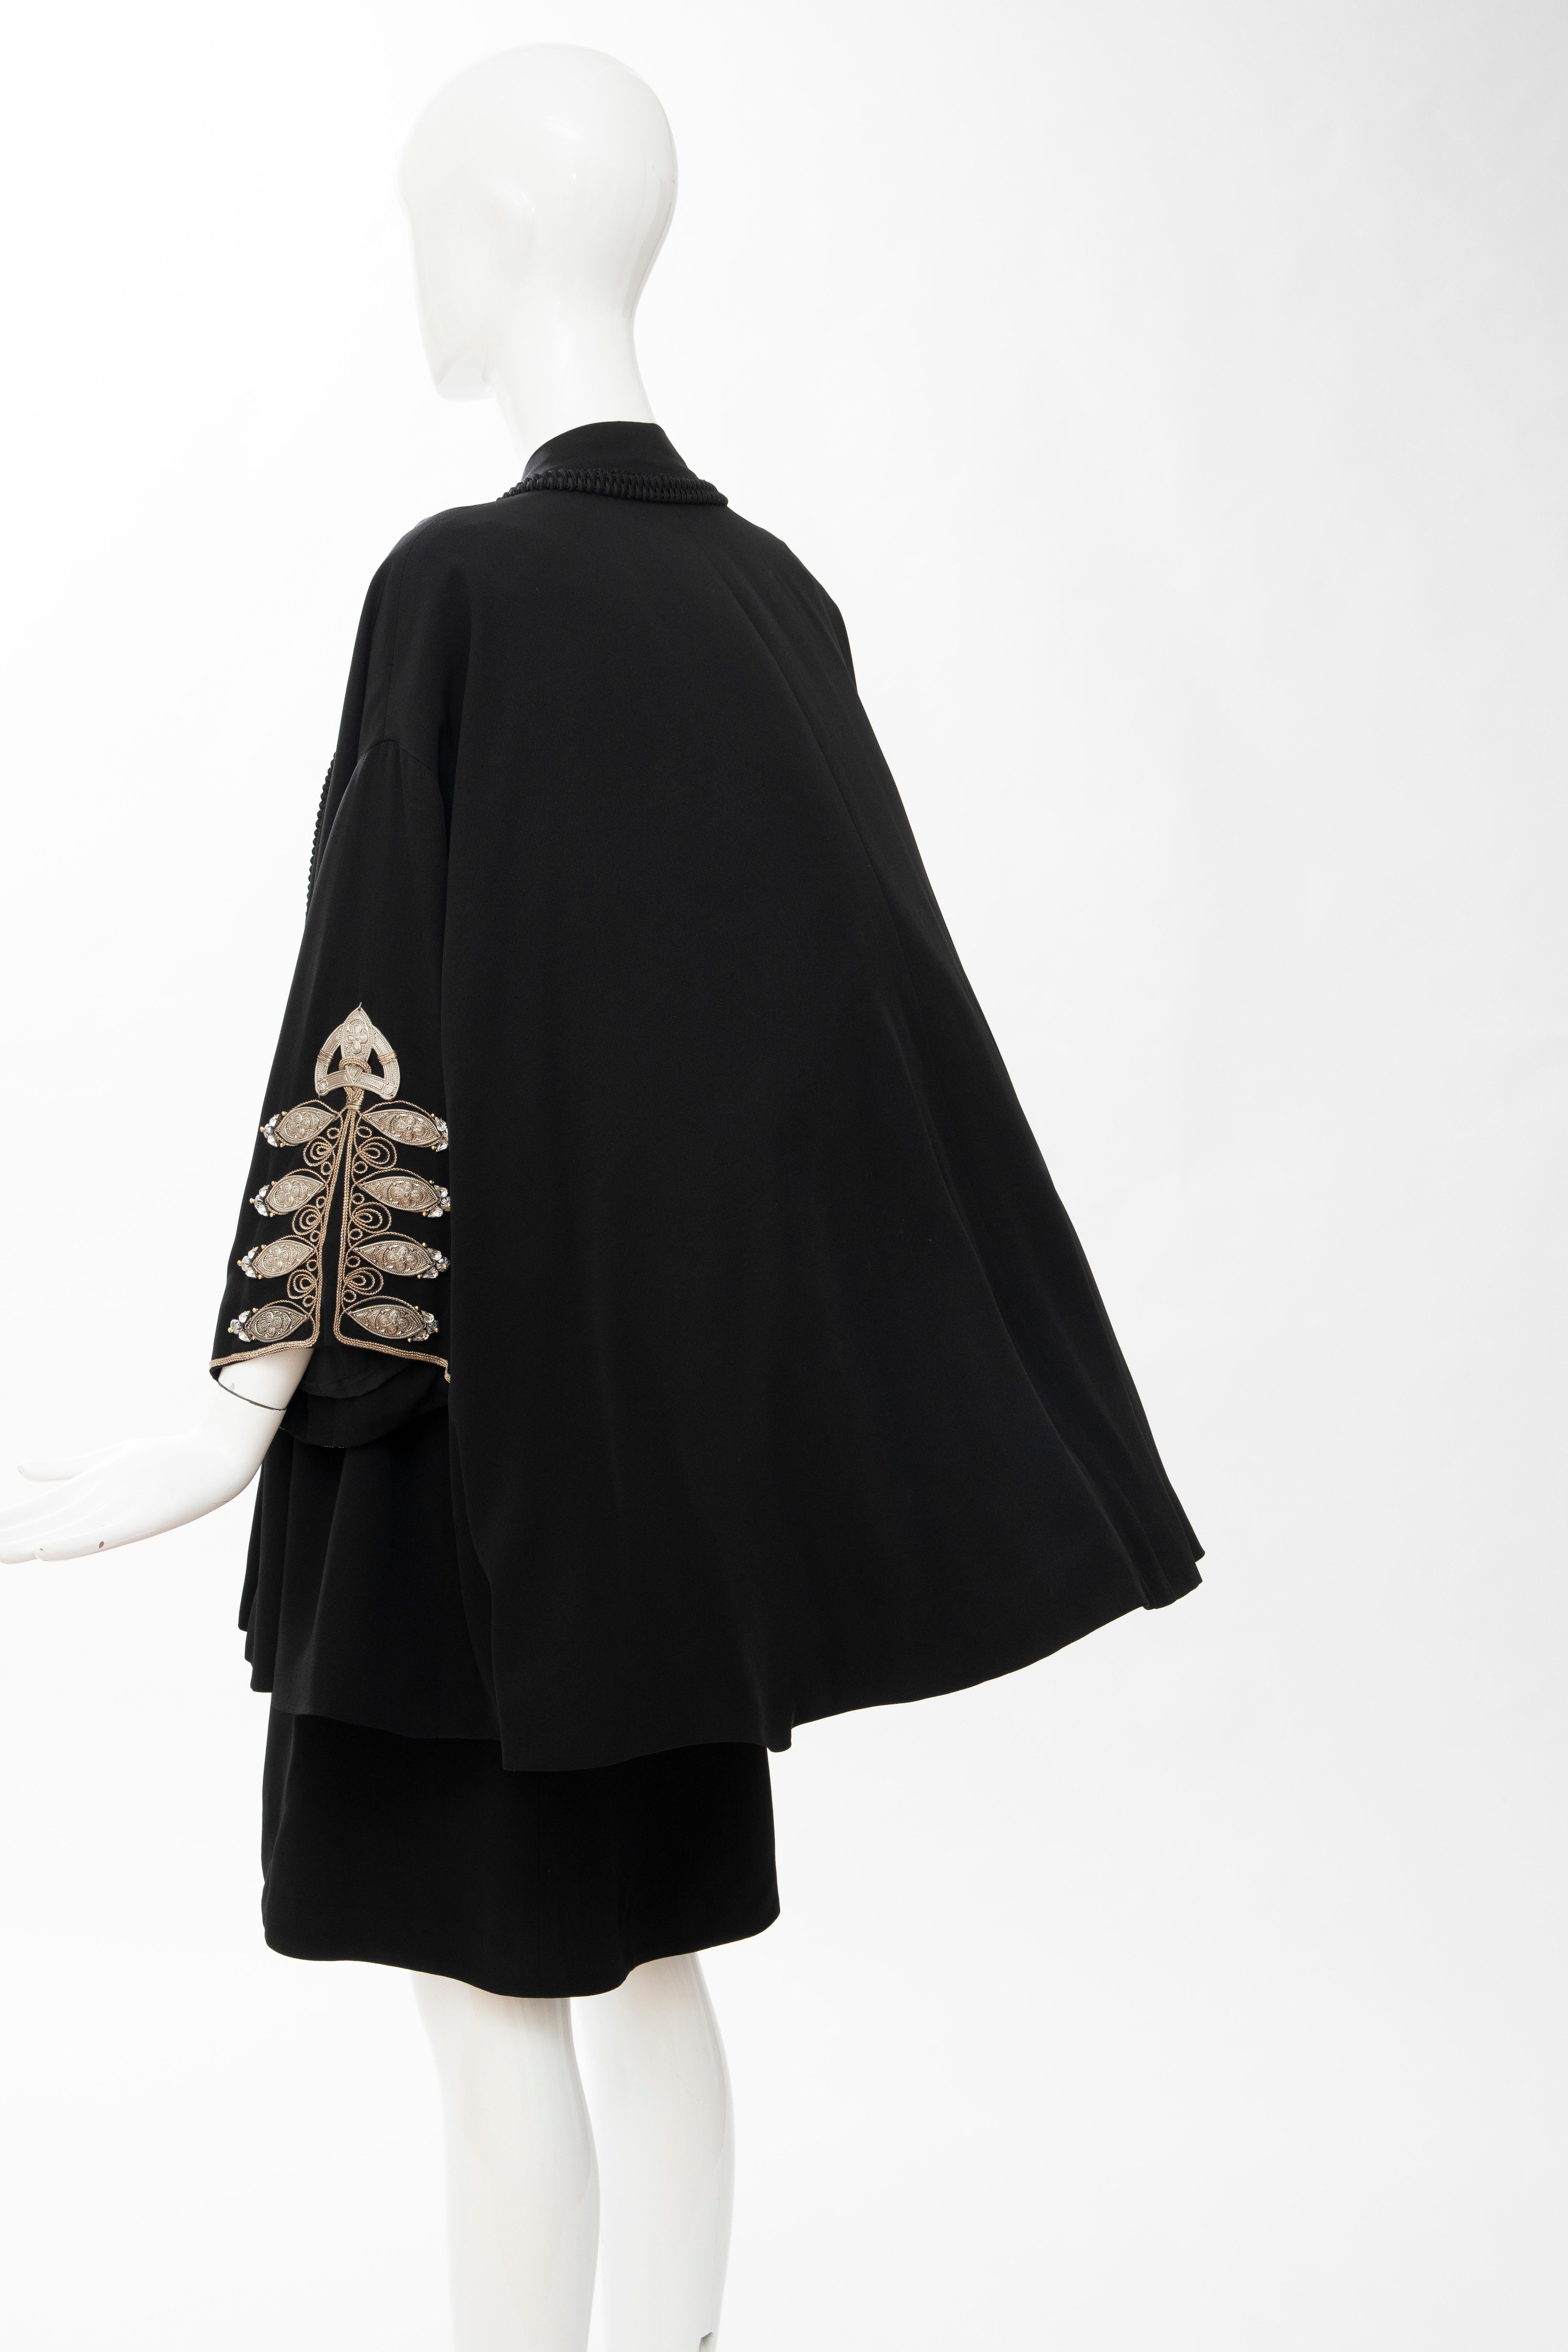 Christian Dior Gianfranco Ferré Numbered Black Embroidered Dress Ensemble, 1991 6